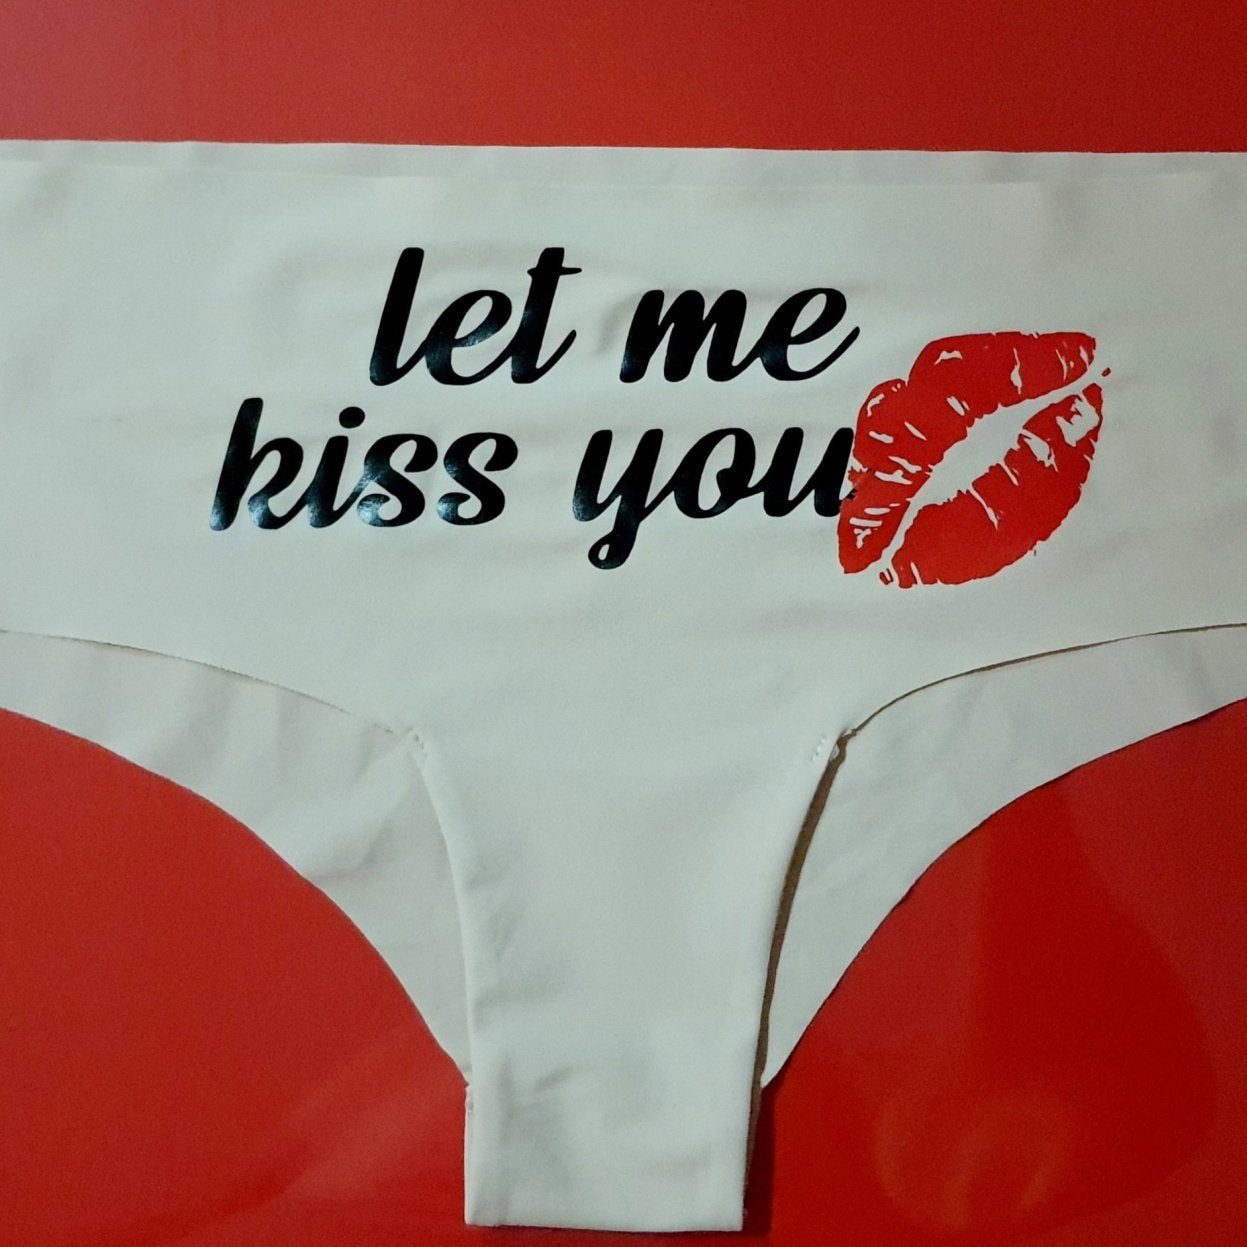 Women underwear - Let me kiss you - Etba3lly